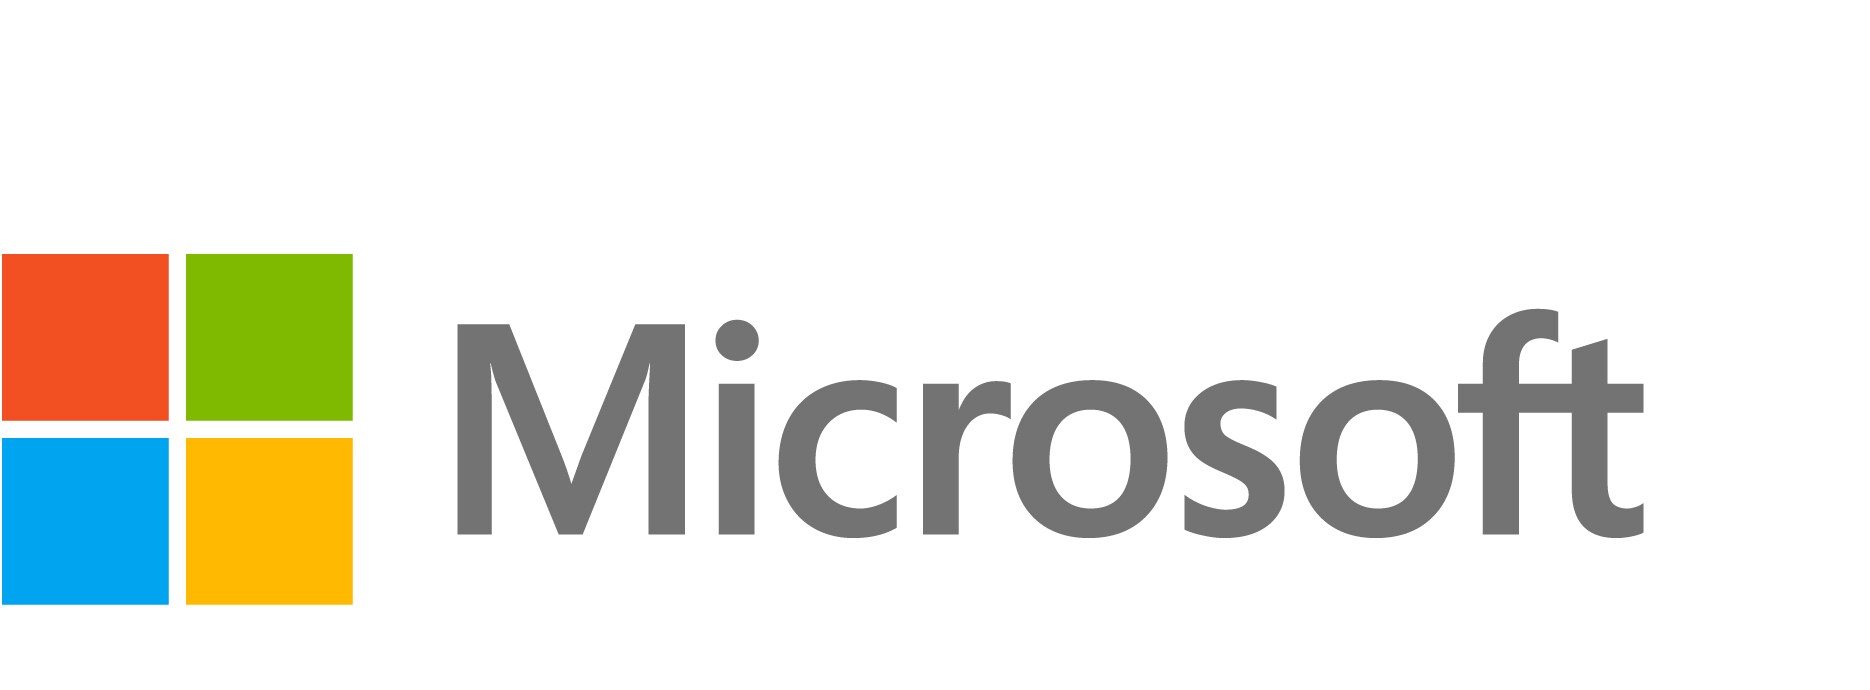 Microsoft Core Infrastructure Server Suite Datacenter - software assurance - 16 cores